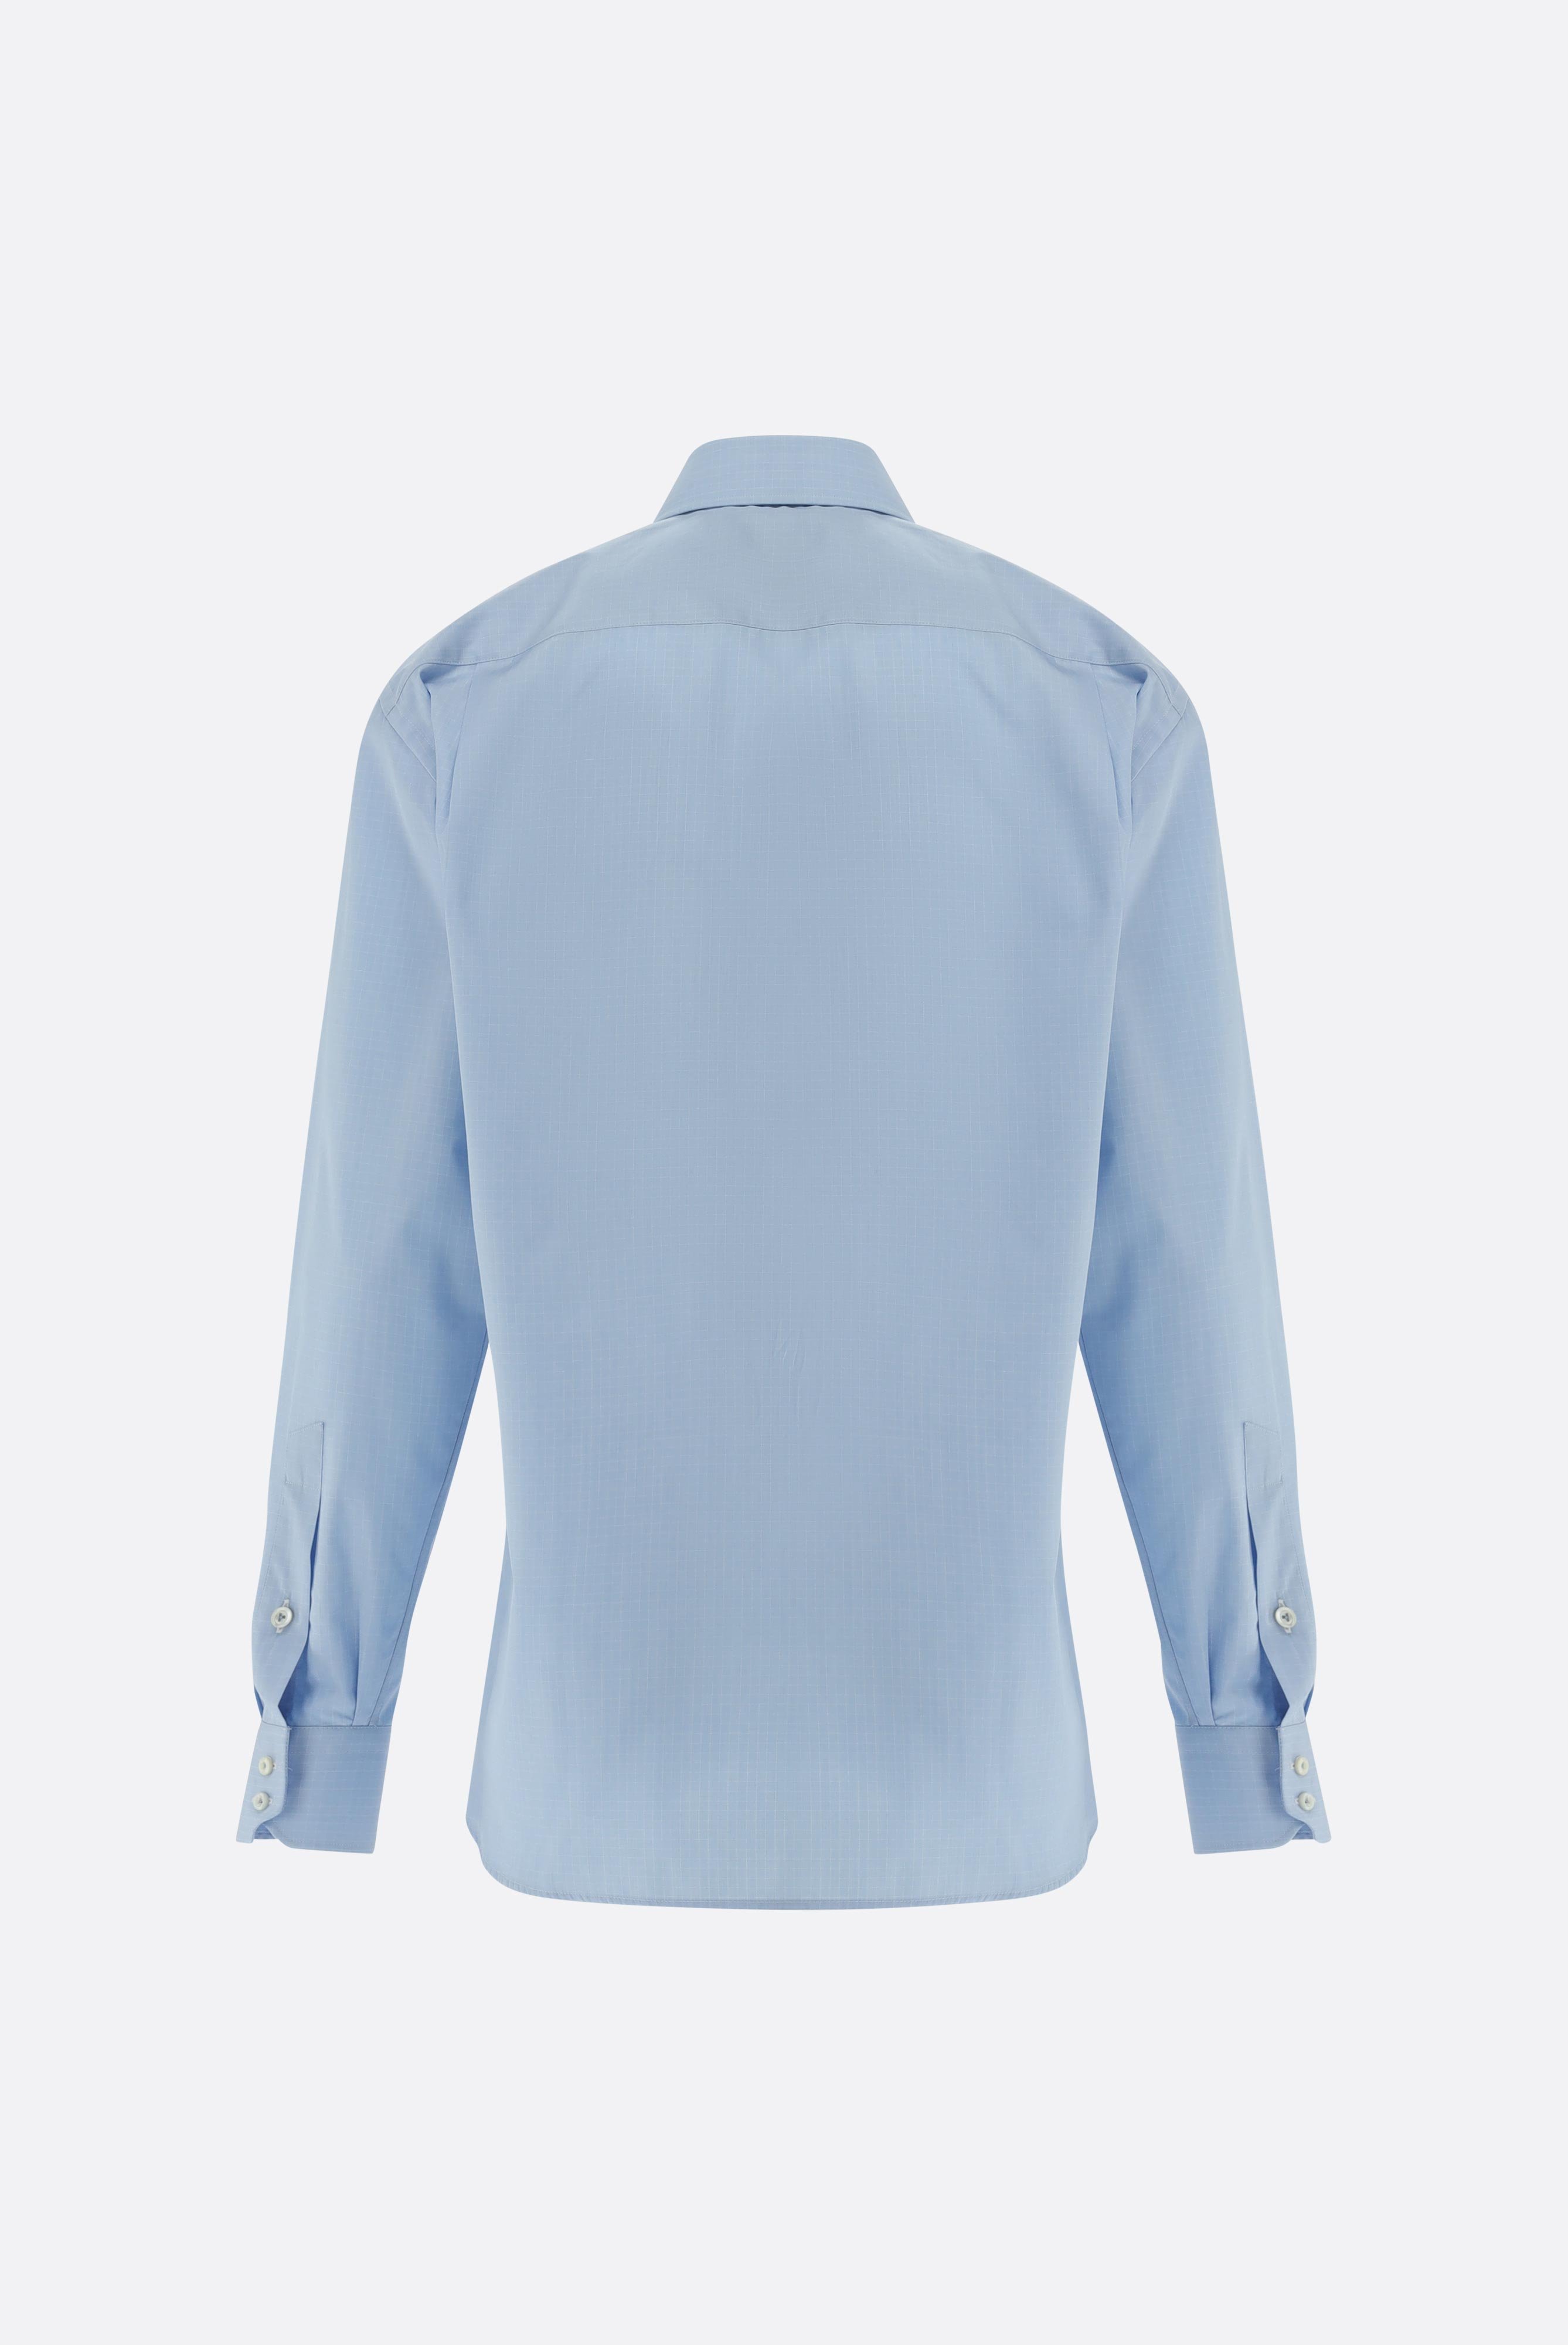 Comfort-Fit shirts+Dobby Business Shirt Comfort Fit+20.2021.AV.162031.730.40